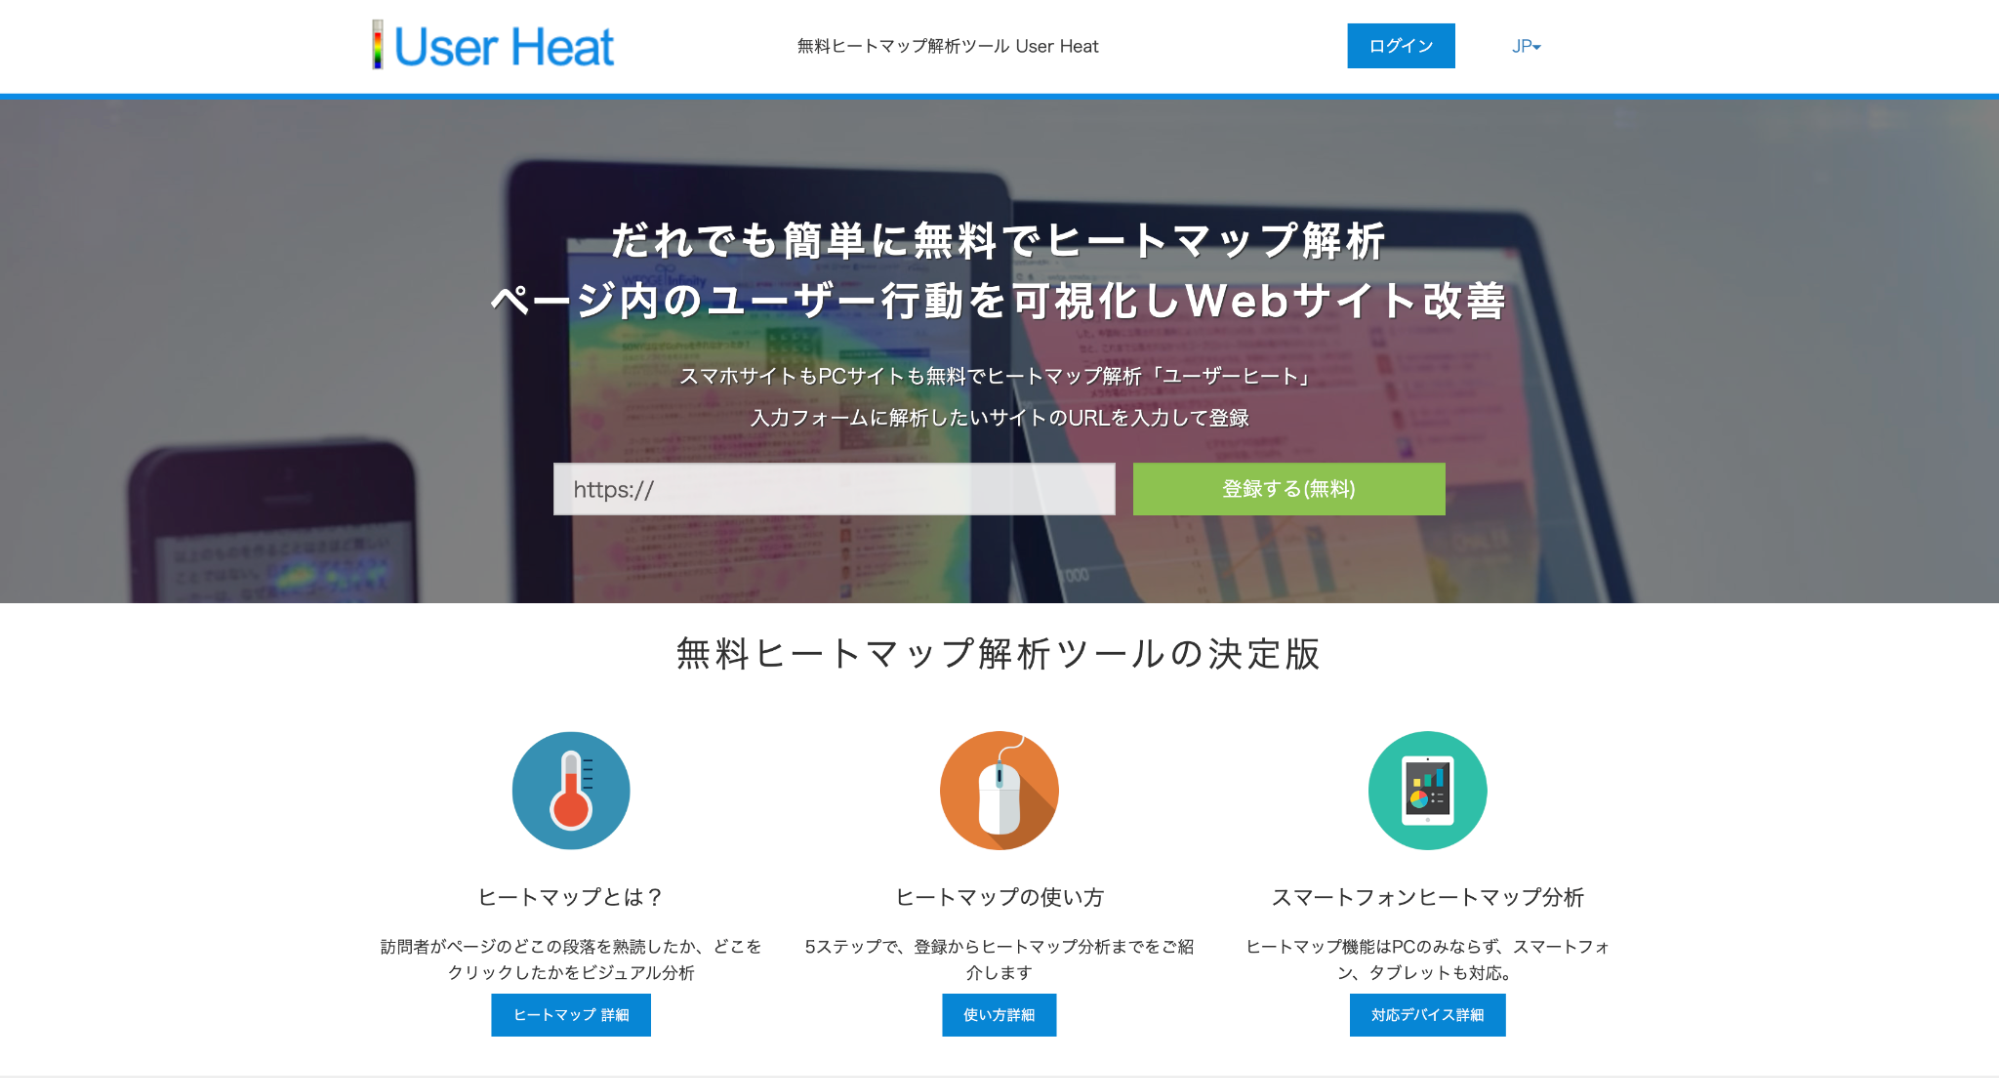 User Heat